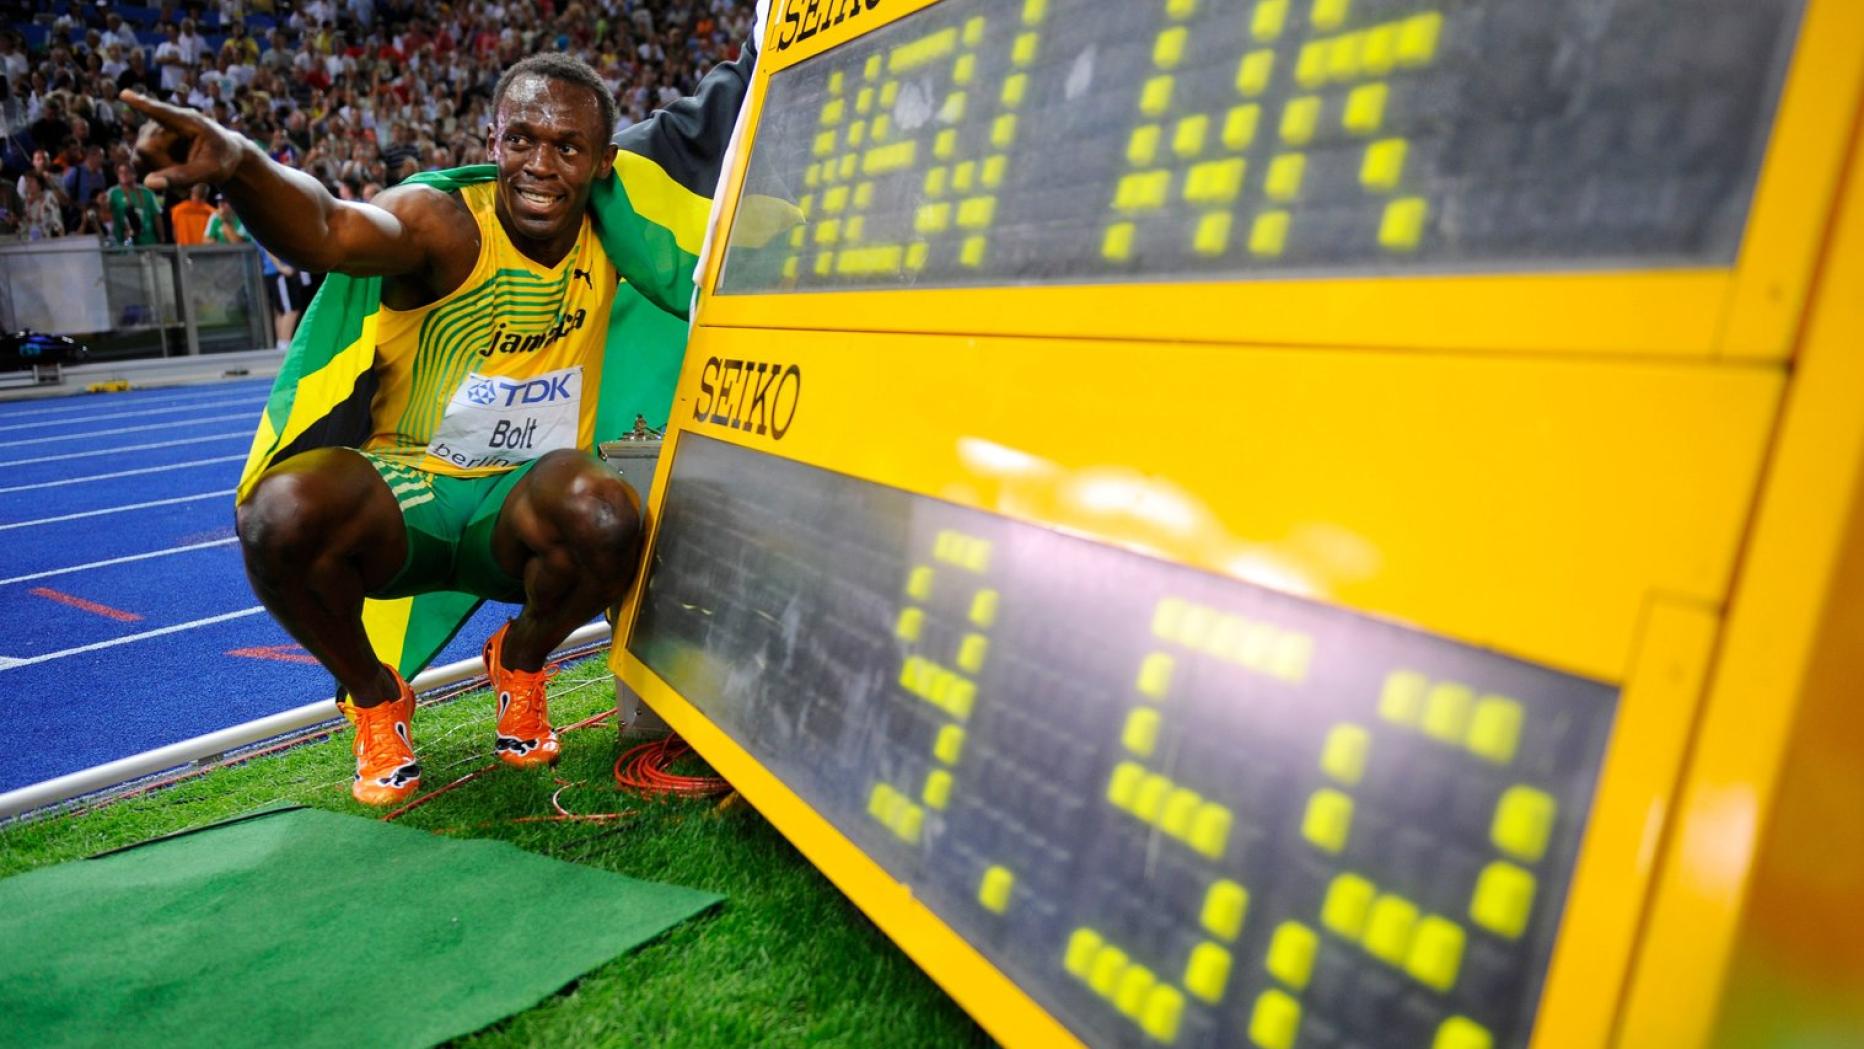 Рекорд 50 метров мужчины. Usain Bolt 9.58. Usain Bolt record 100m. Усейн болт плачет.